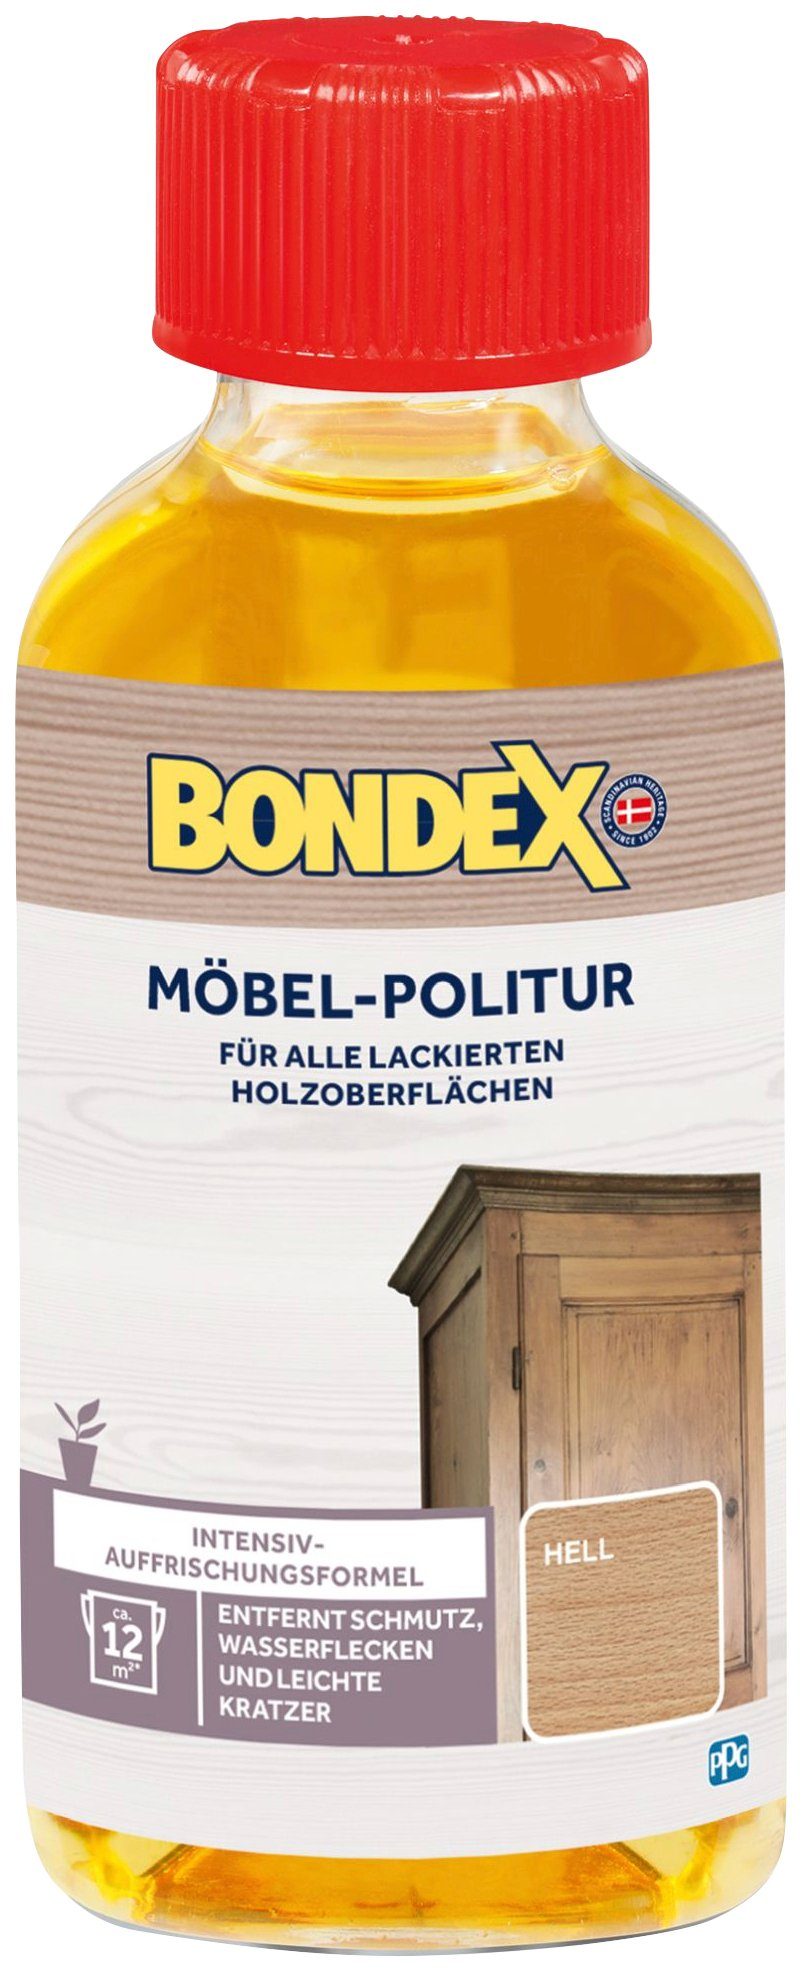 Bondex MÖBEL-POLITUR Dunkel Holzpflegeöl, 0,15 l natur | Bodenpflege